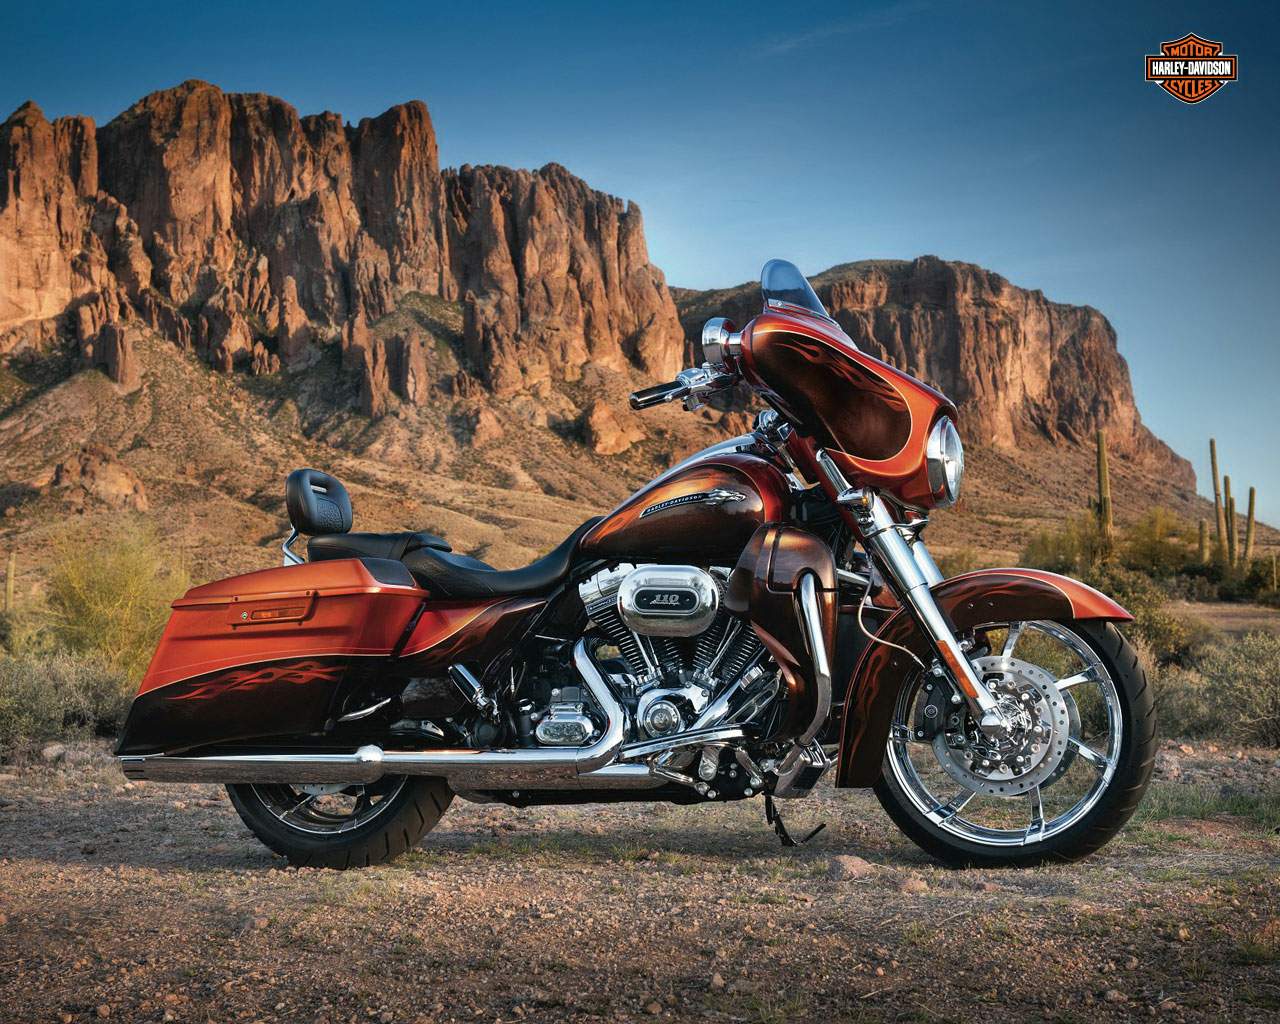 2013 Harley Davidson Cvo Street Glide Wallpaper For Desktop